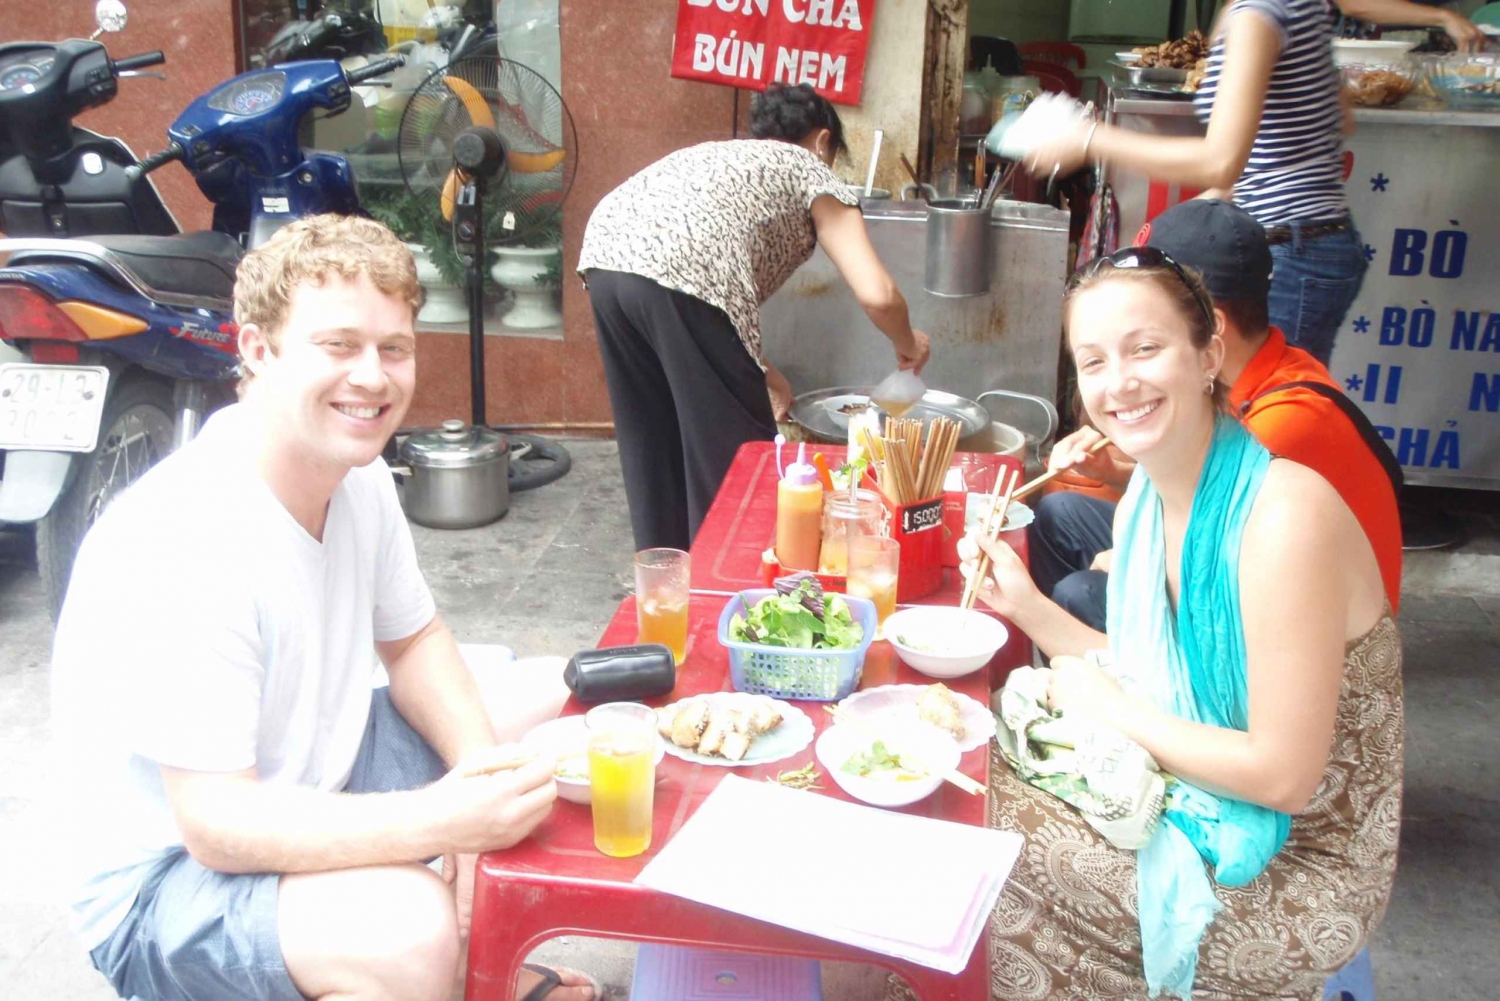 Hanoi Food on Foot: Hanois gamla kvarter: Vandring på fot: Vandring i Hanois gamla kvarter